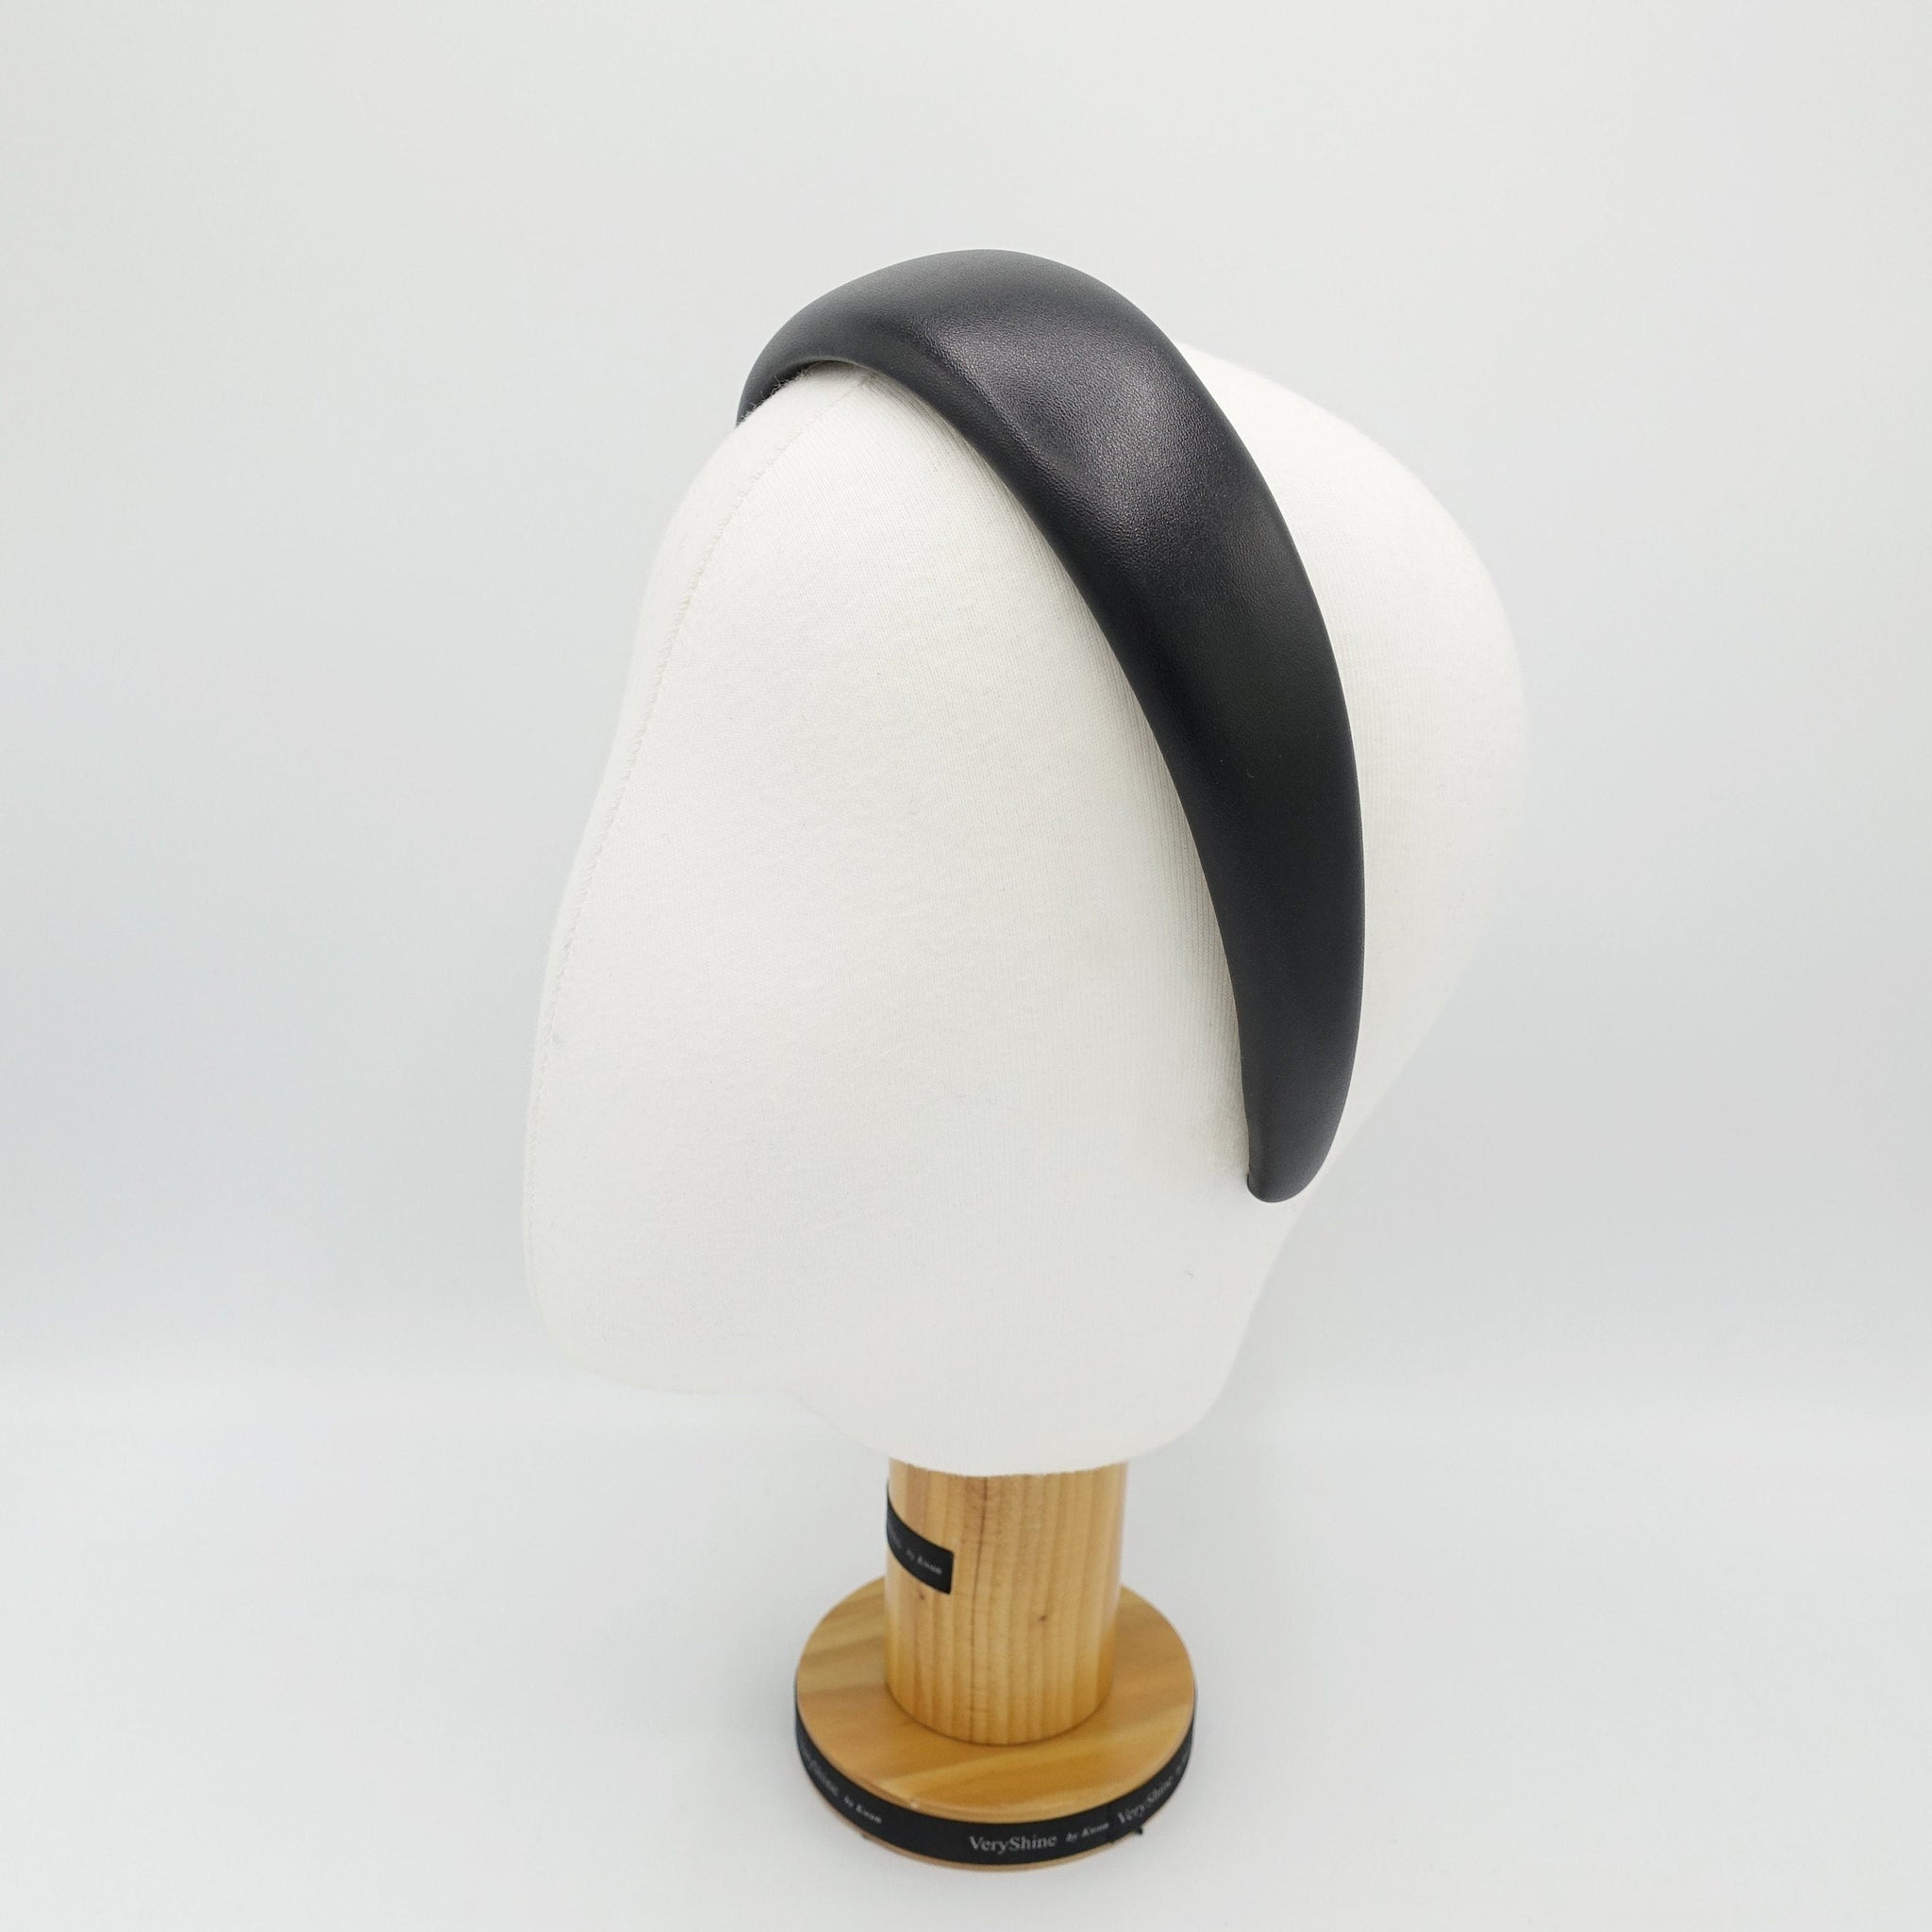 veryshine.com Headband Black leather padded headband stylish hair accessory for women